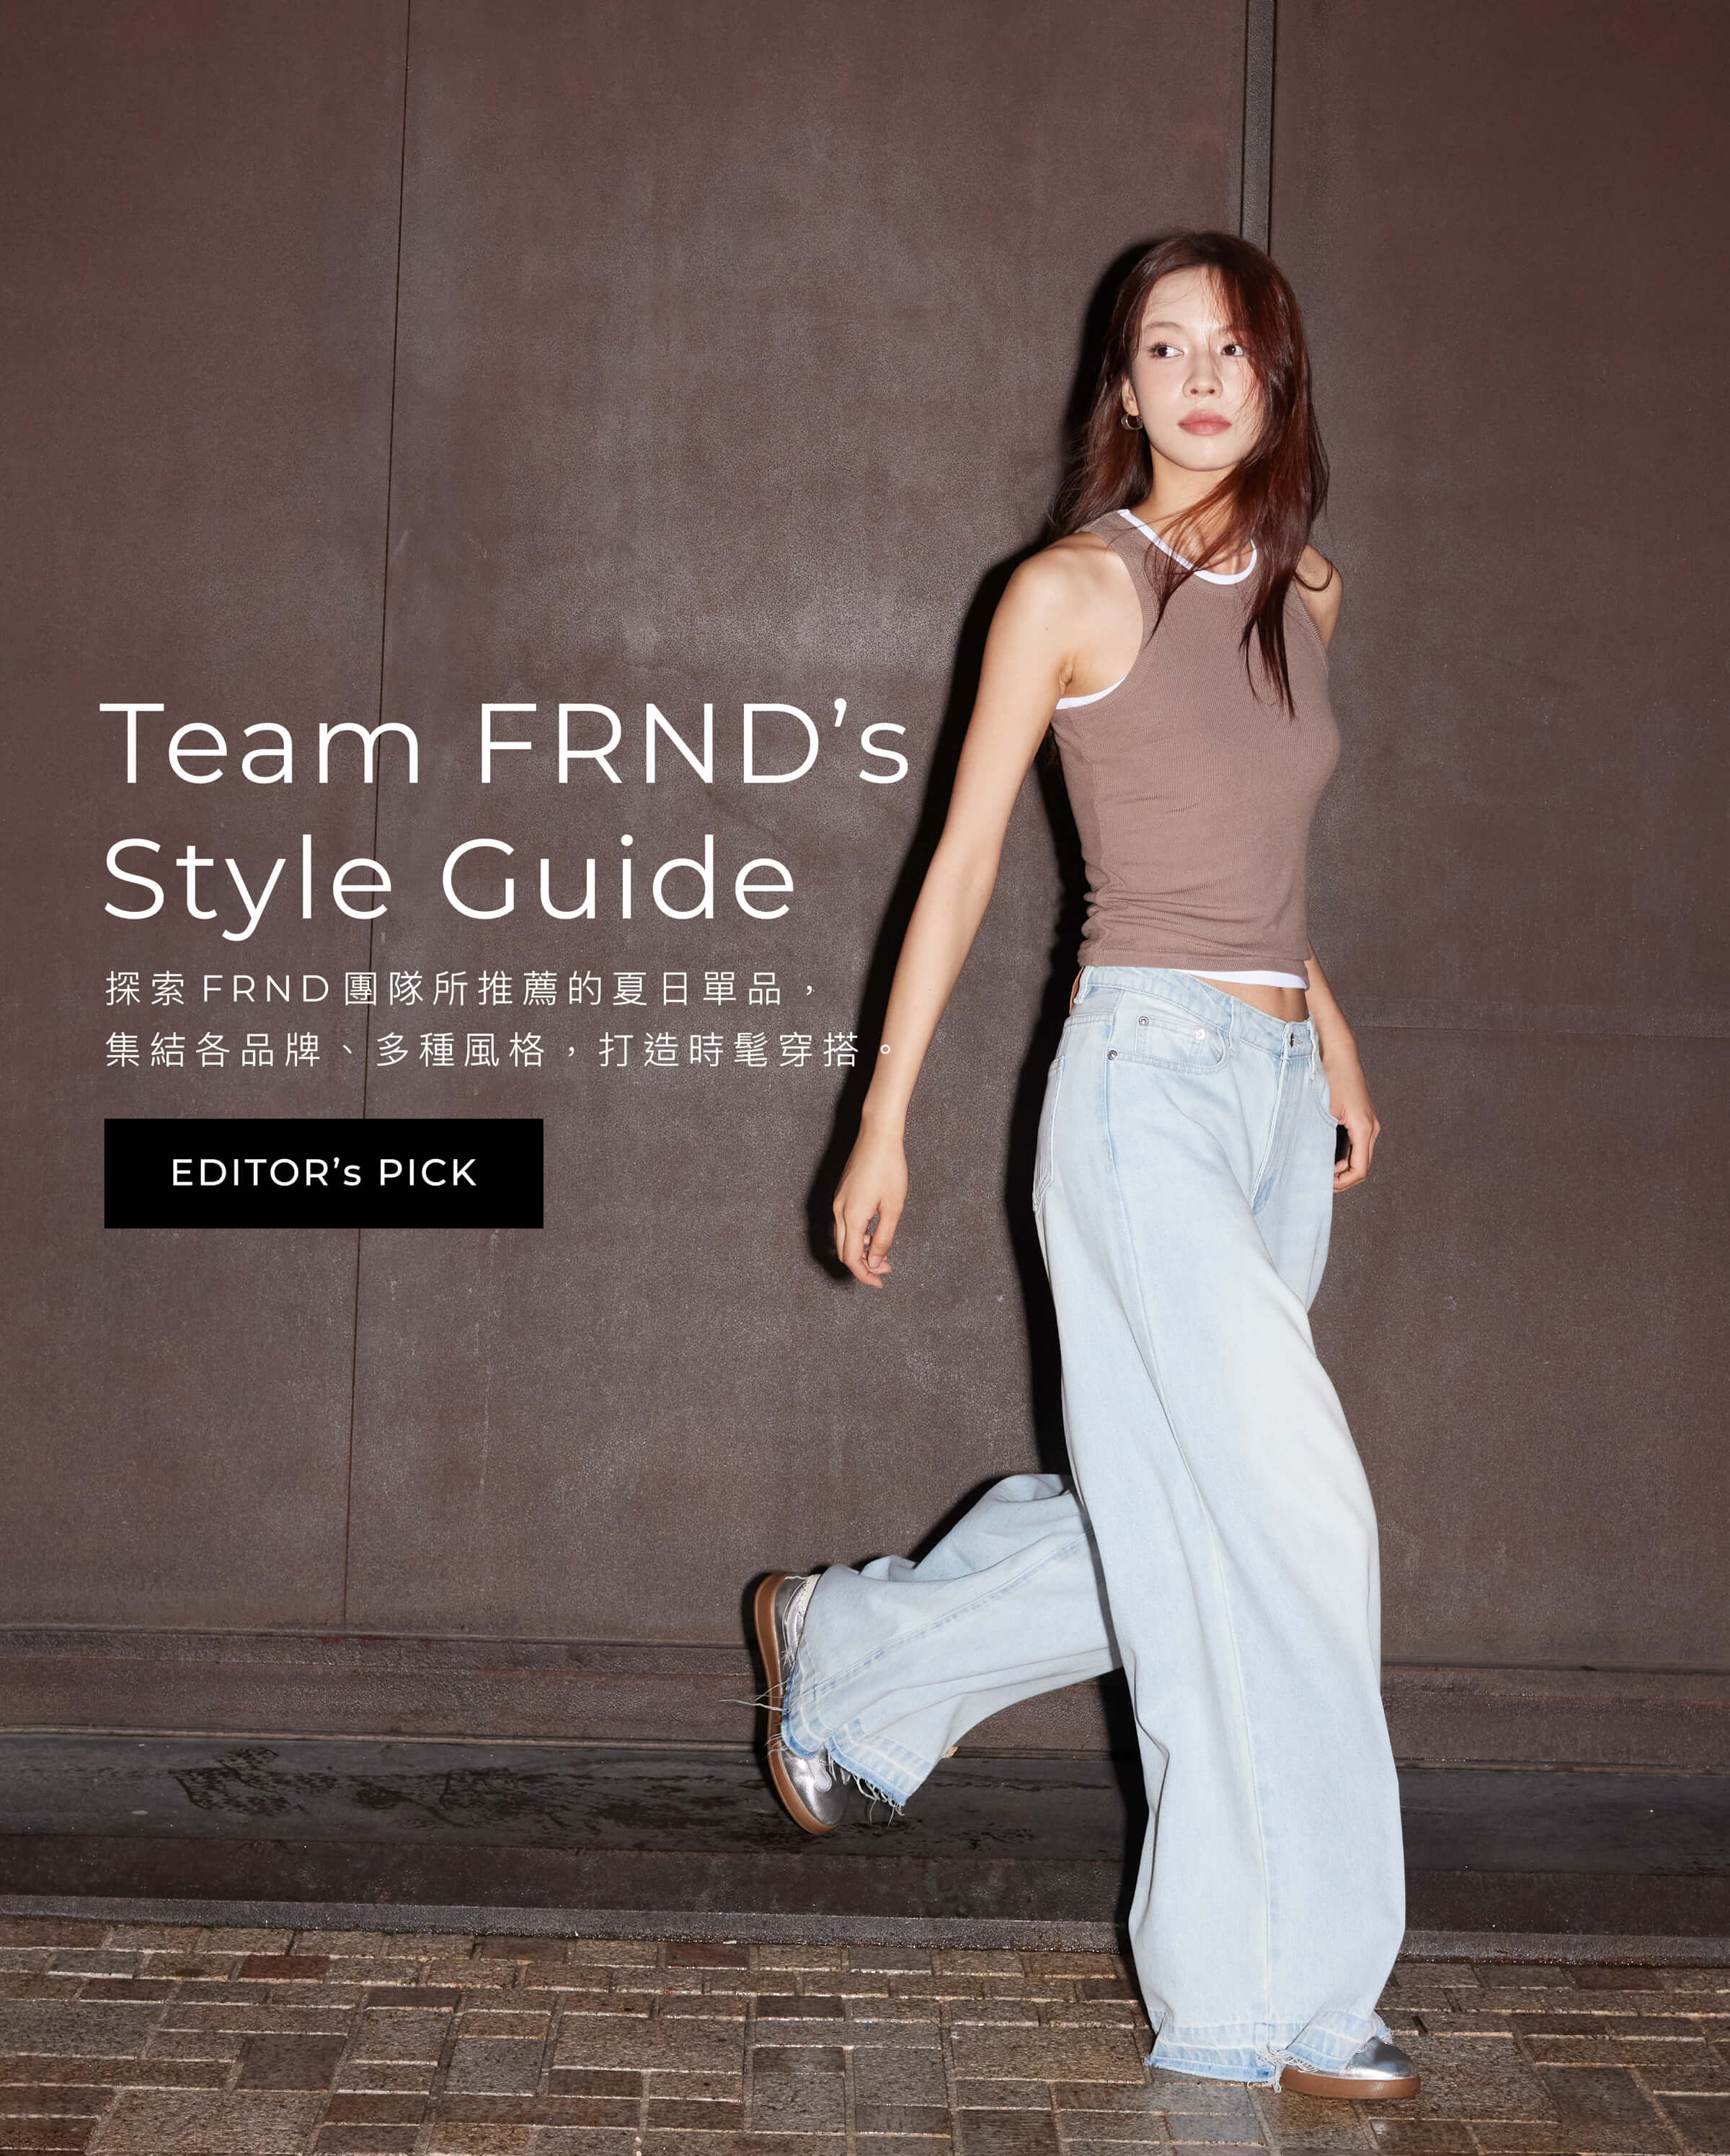 Team FRND’s Summer Style Guide